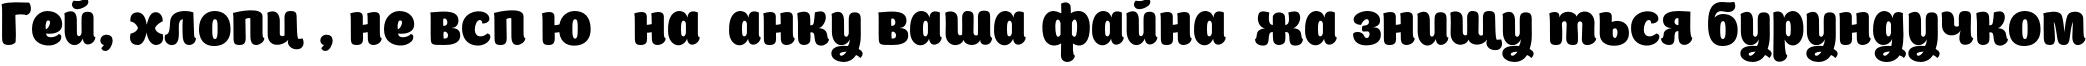 Пример написания шрифтом Boomboom текста на украинском